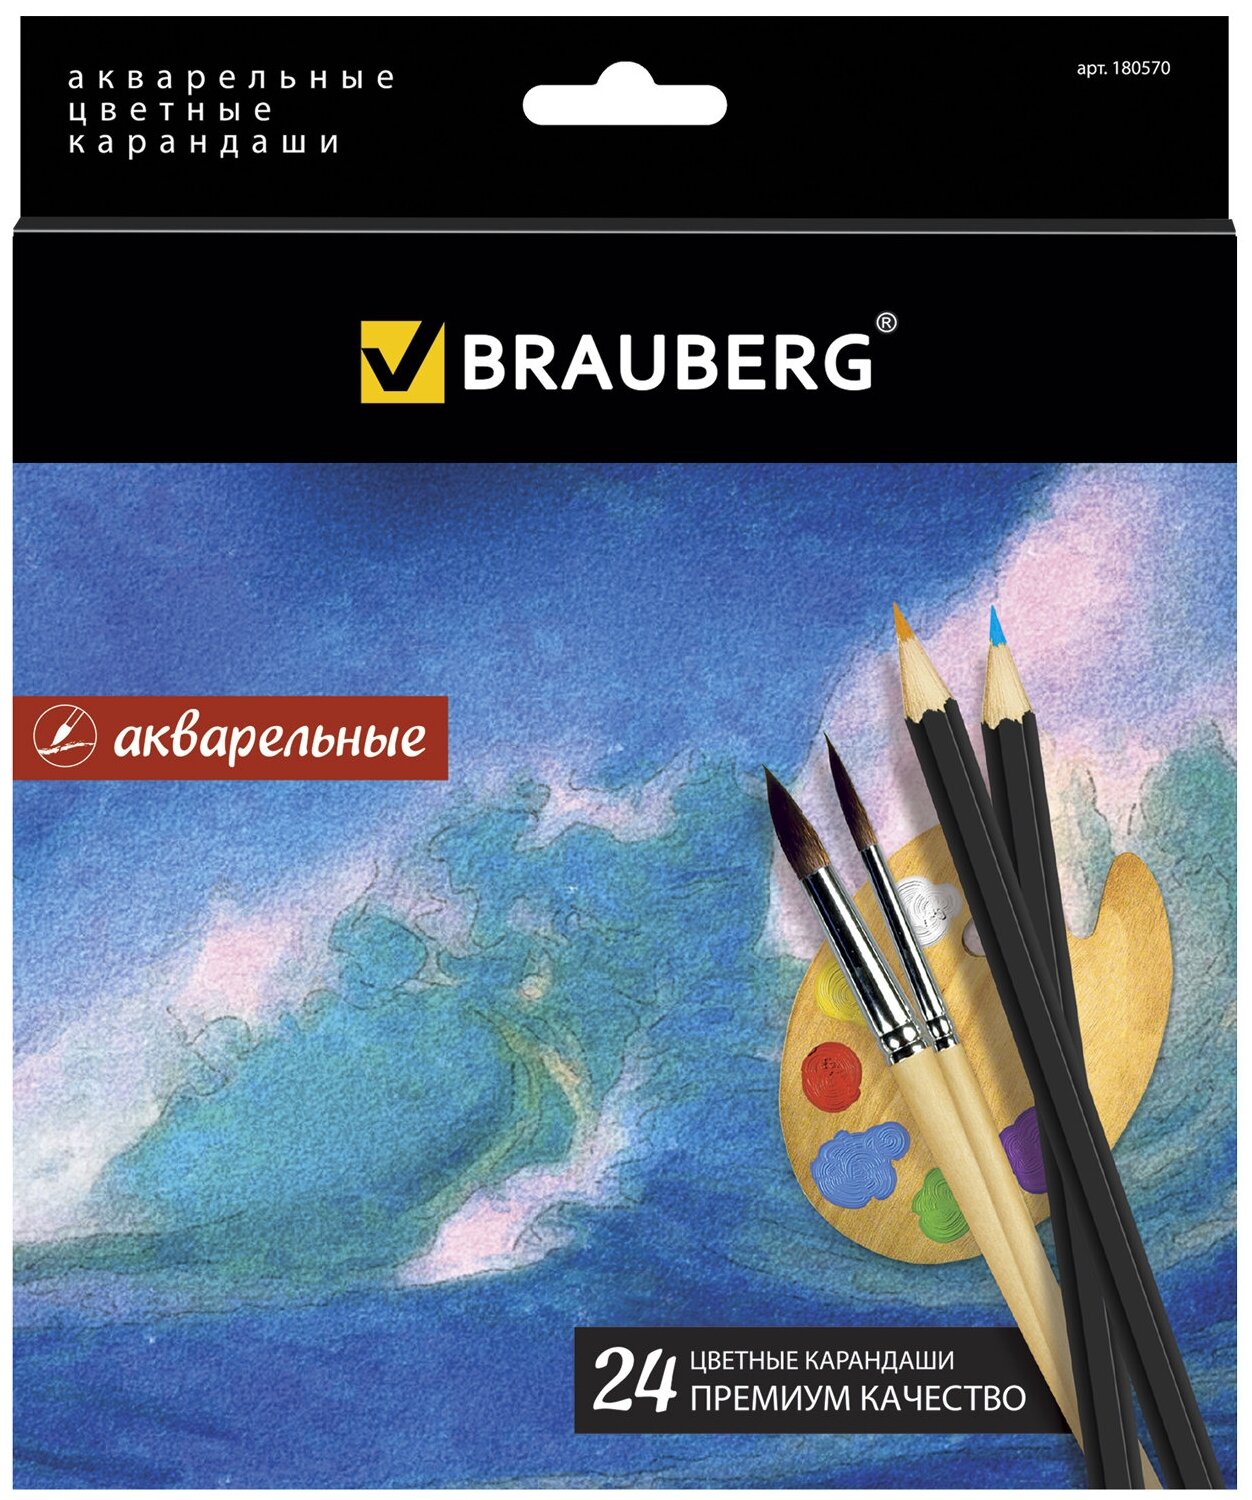 Brauberg - фото №1